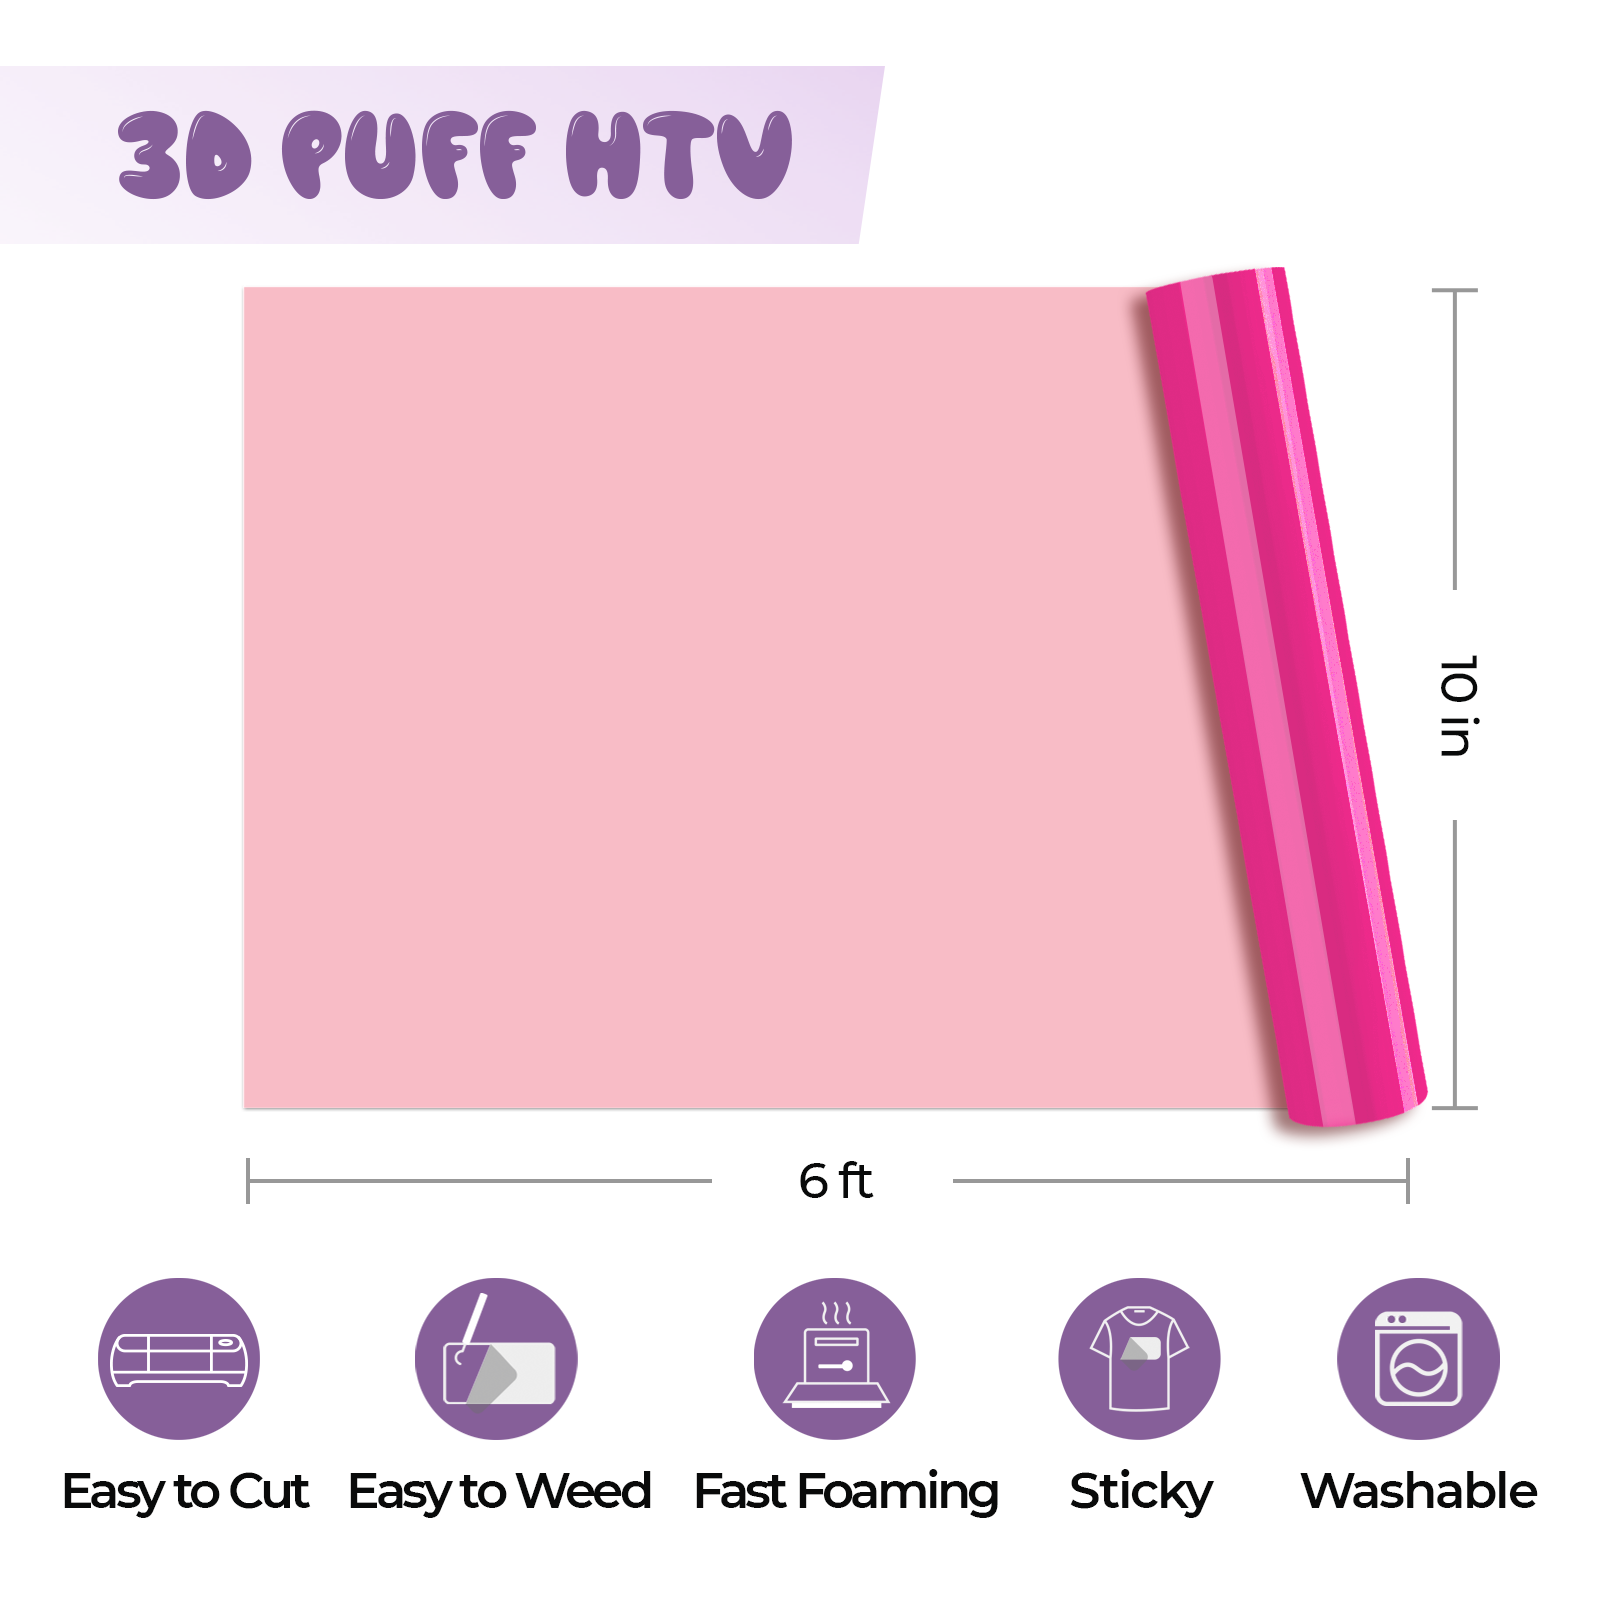 Light Pink Checkered Puff Heat Transfer Vinyl Sheet – Hernandez Homemade  Blanks & More